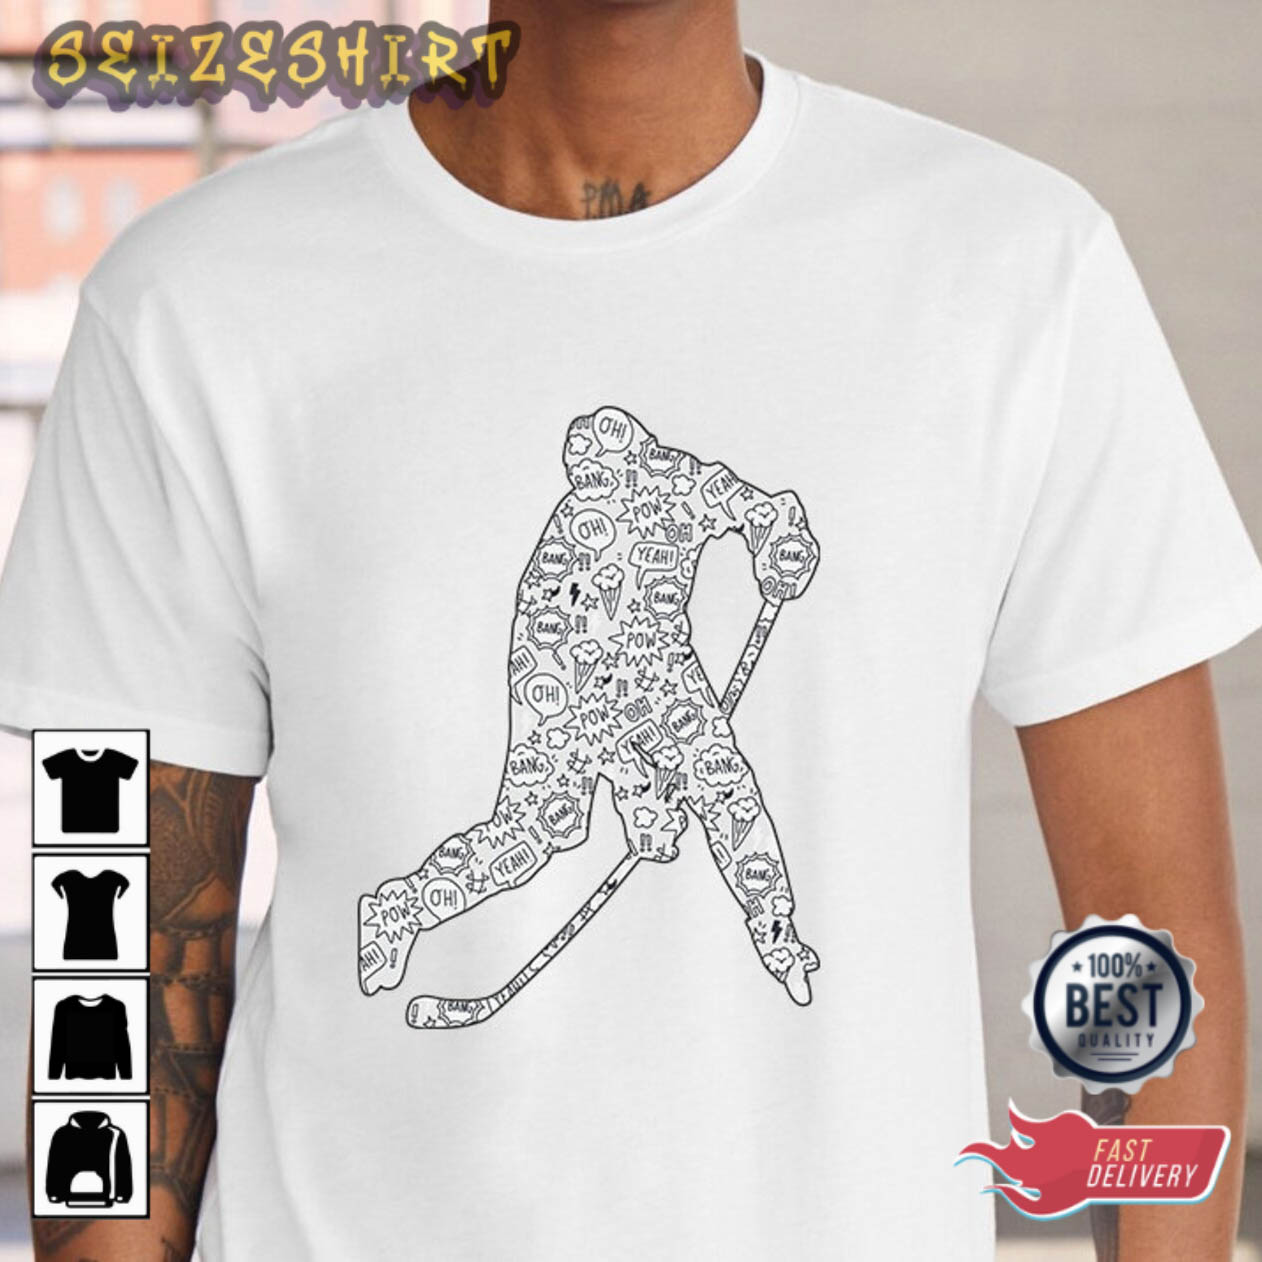 Hockey T-shirt for Men - Ice Hockey Shirt